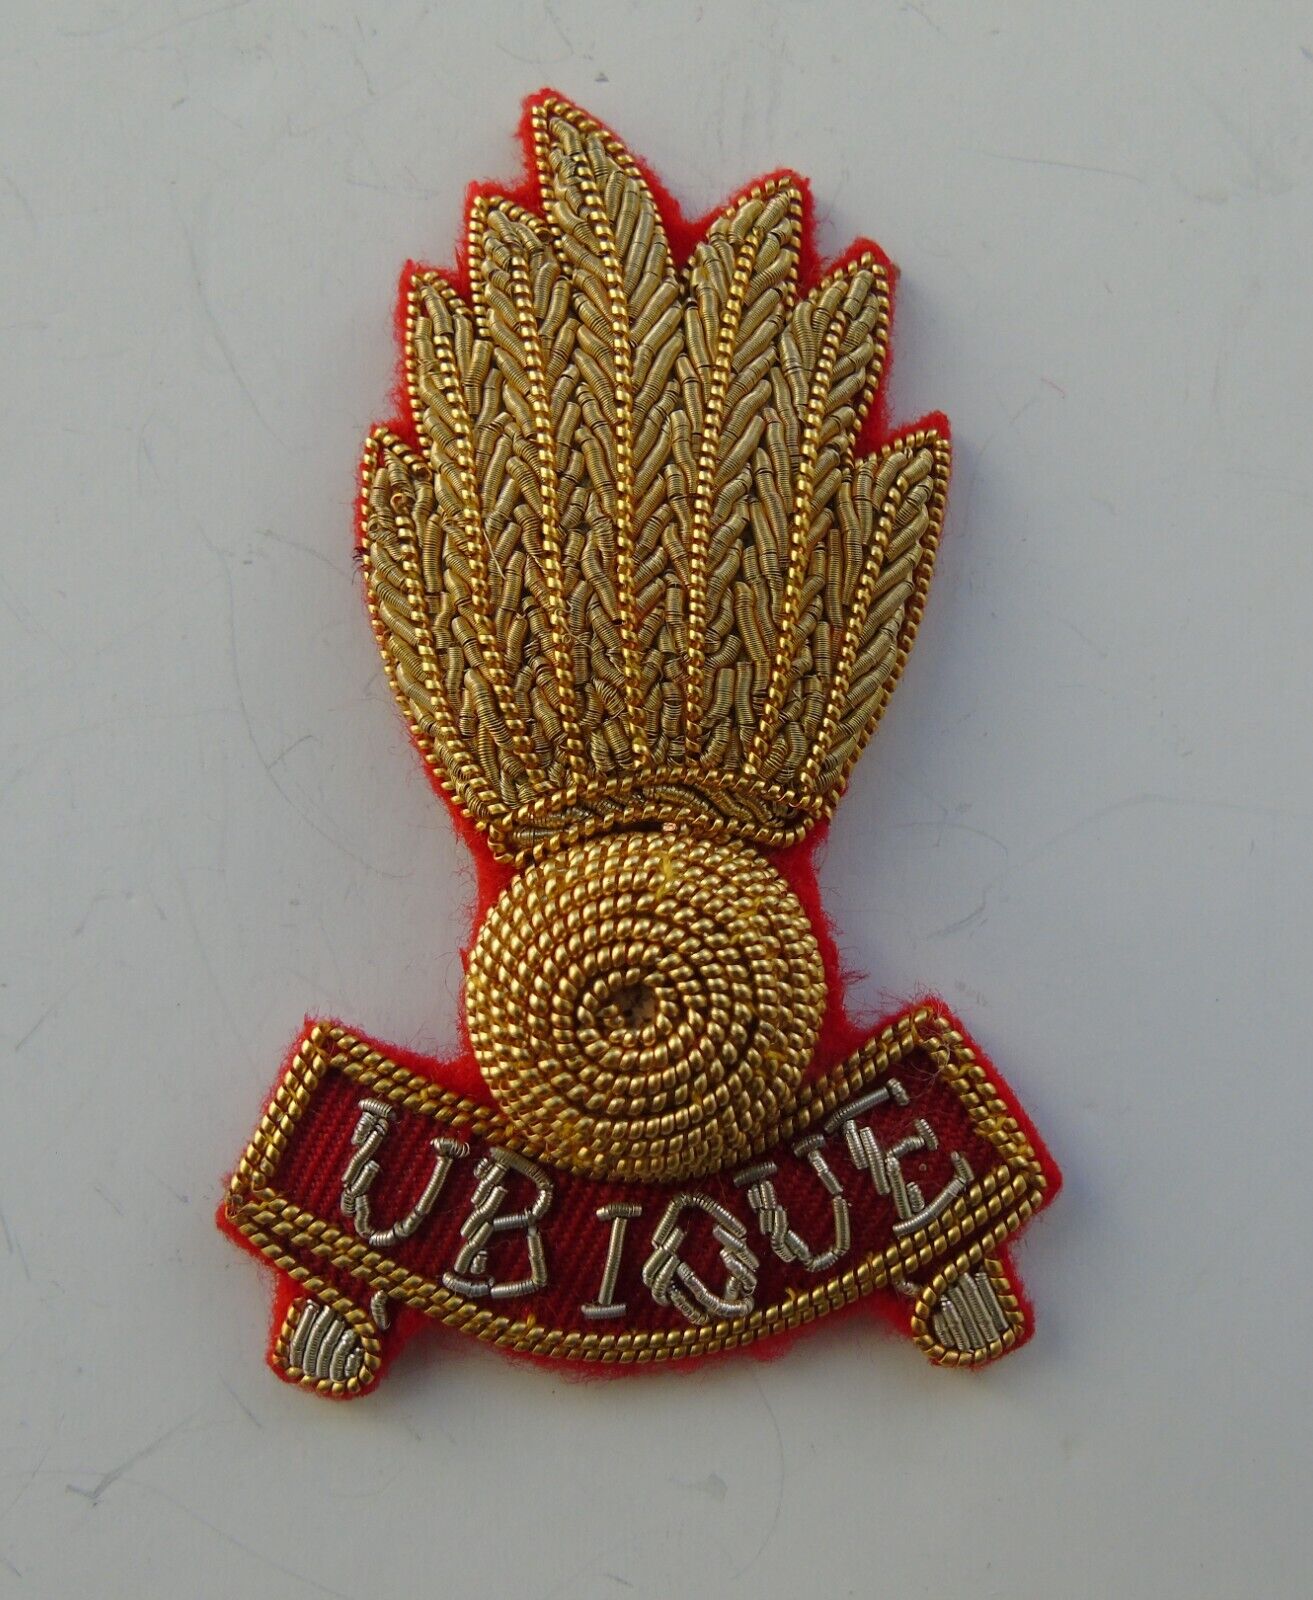 British Army Royal Artillery Officers Bullion Side Cap Badge